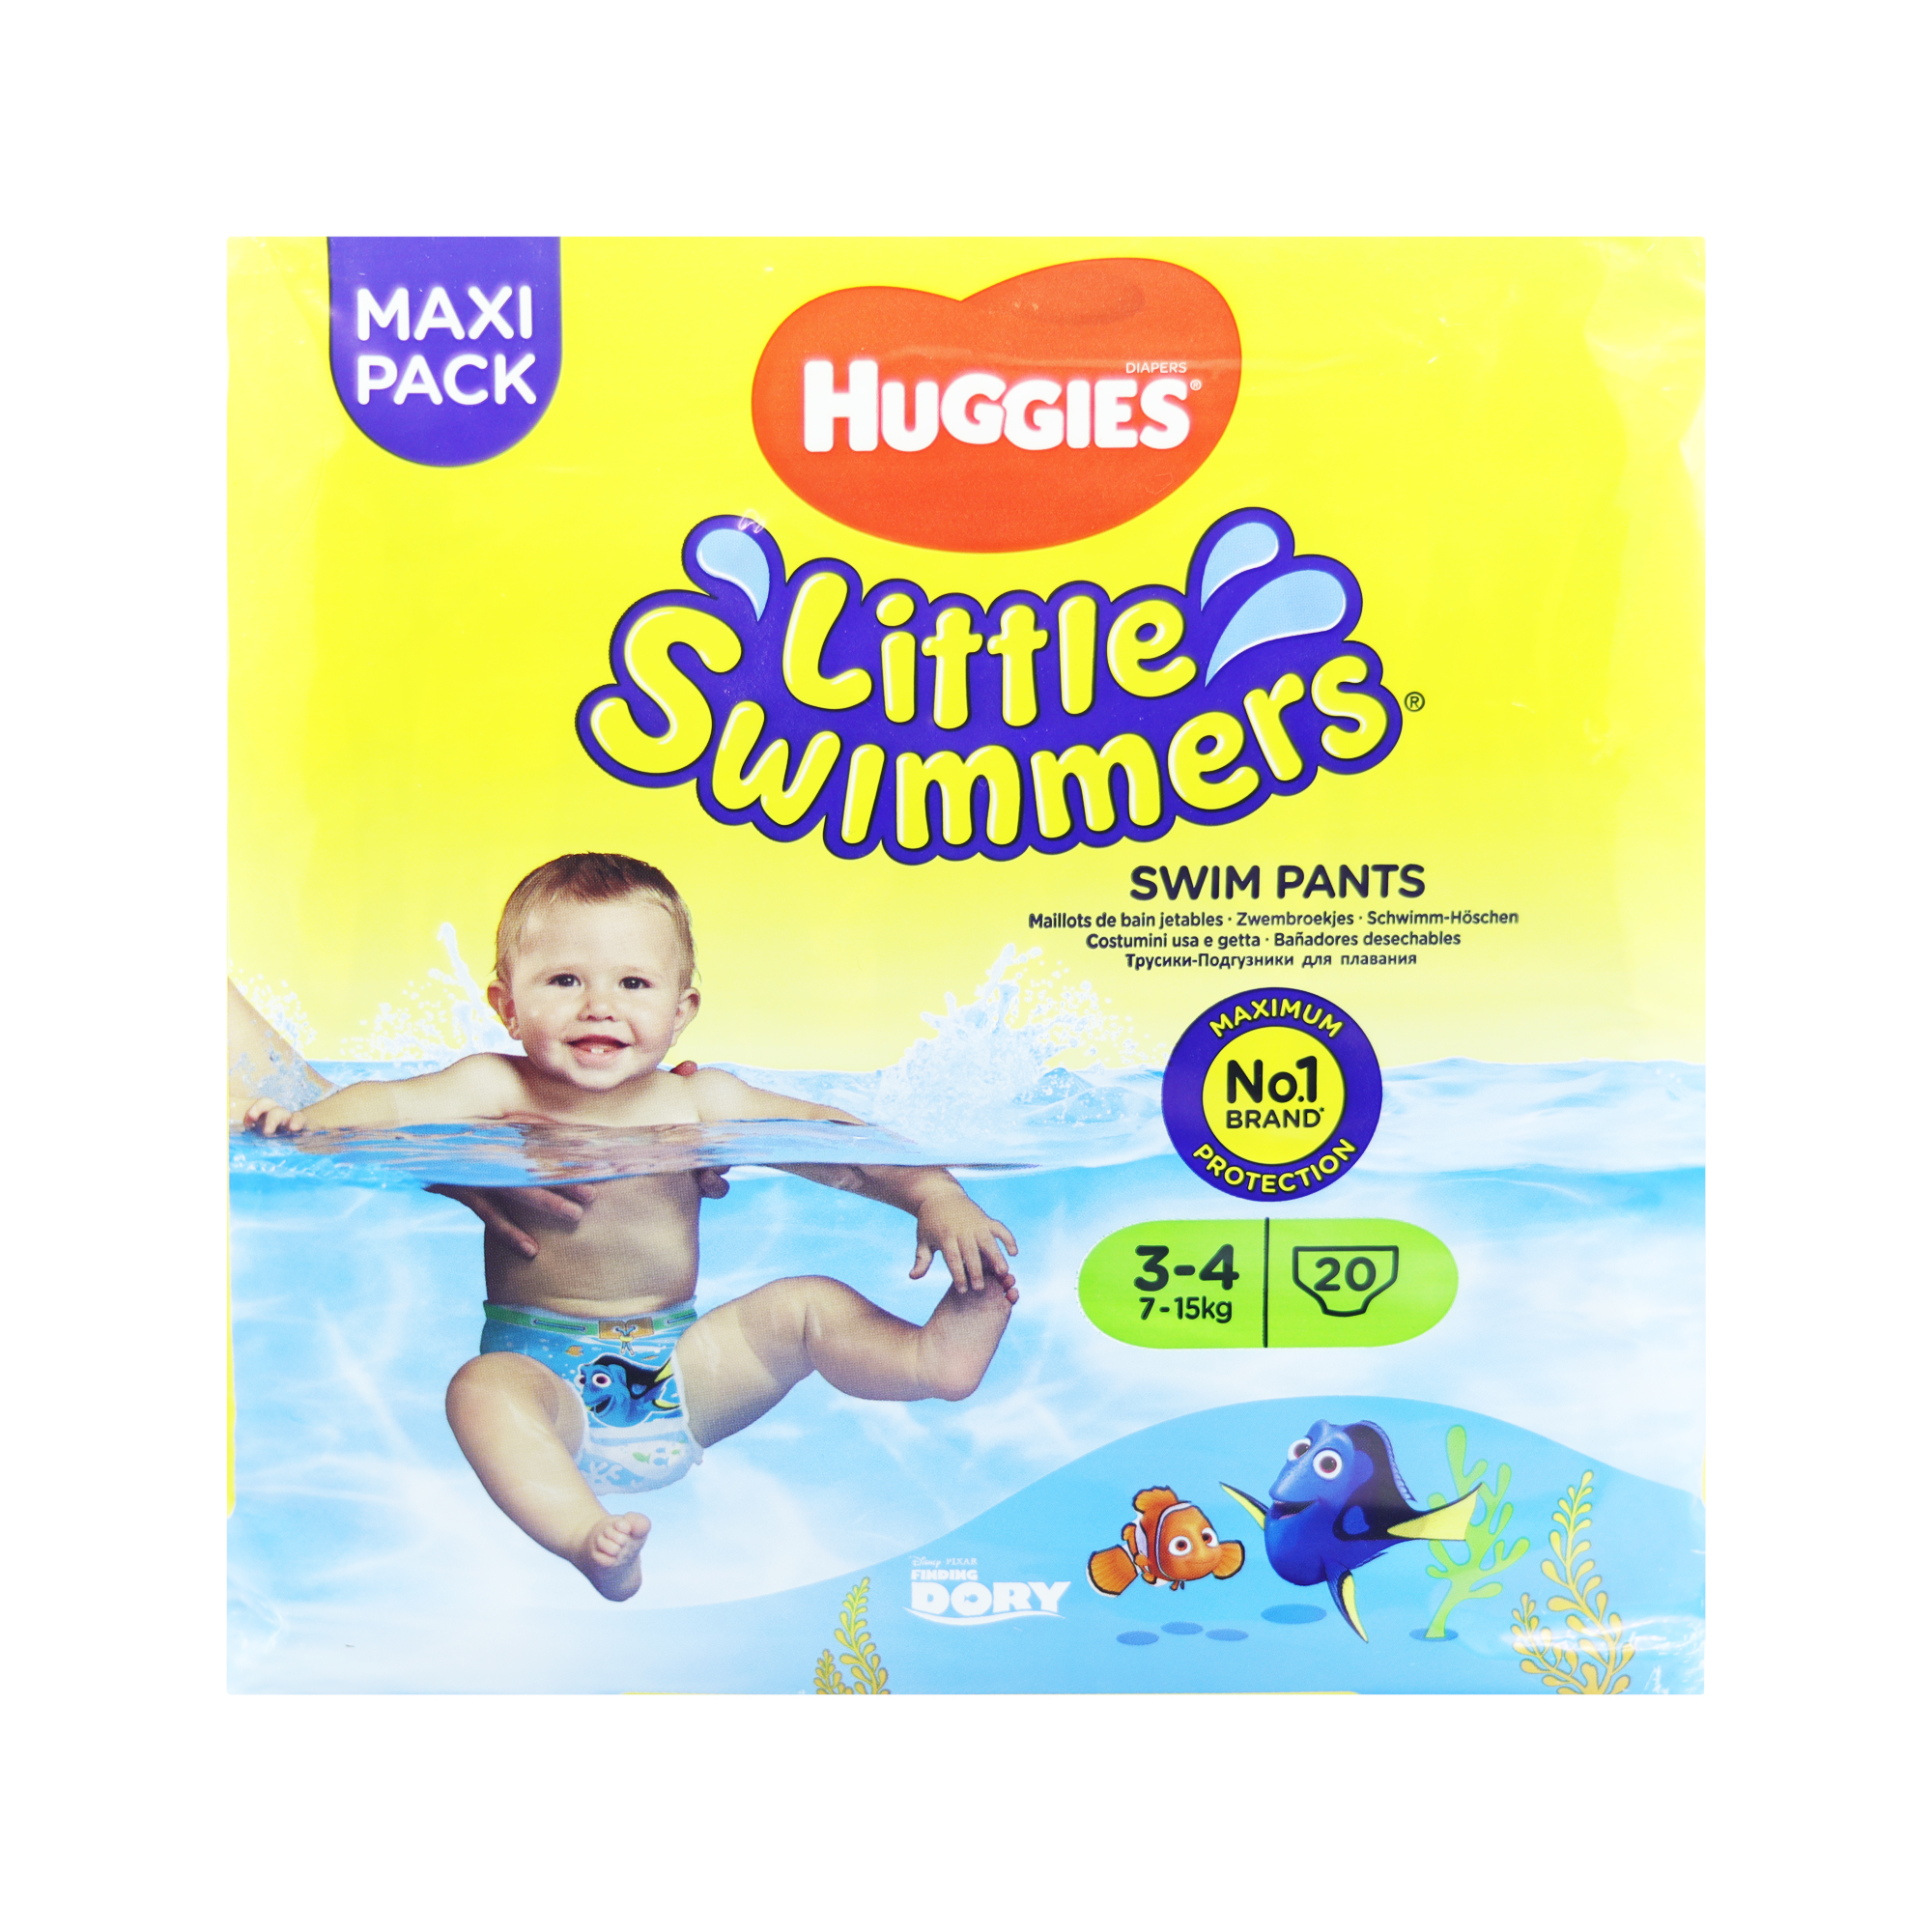 Huggies Swim Pants size 3-4 / Baby 7-15kg (x12)